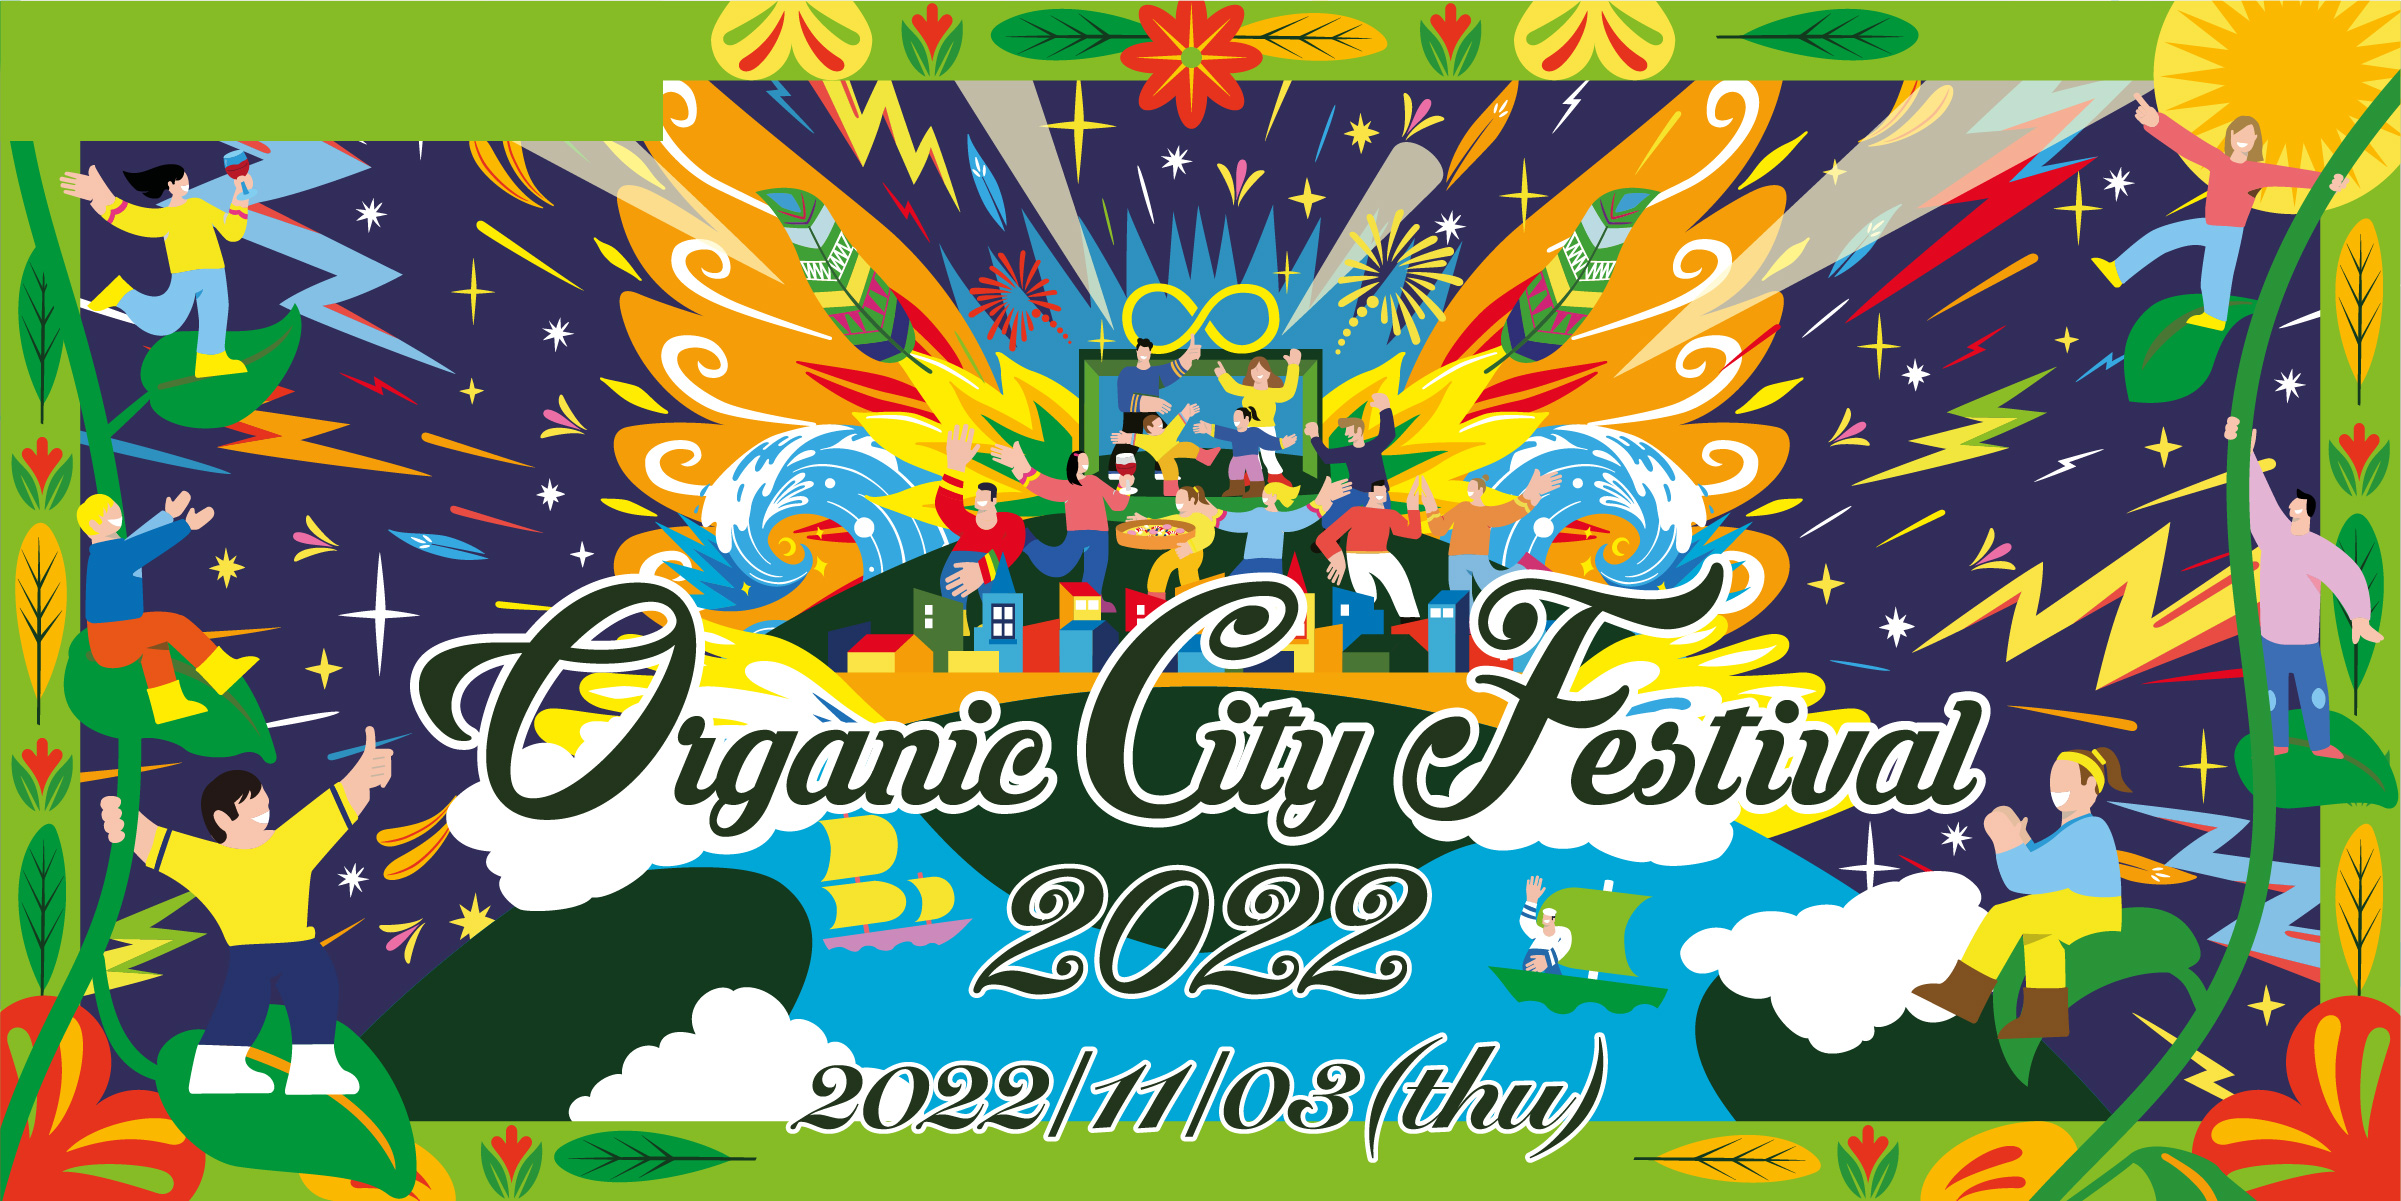 Organic City Festival 2022